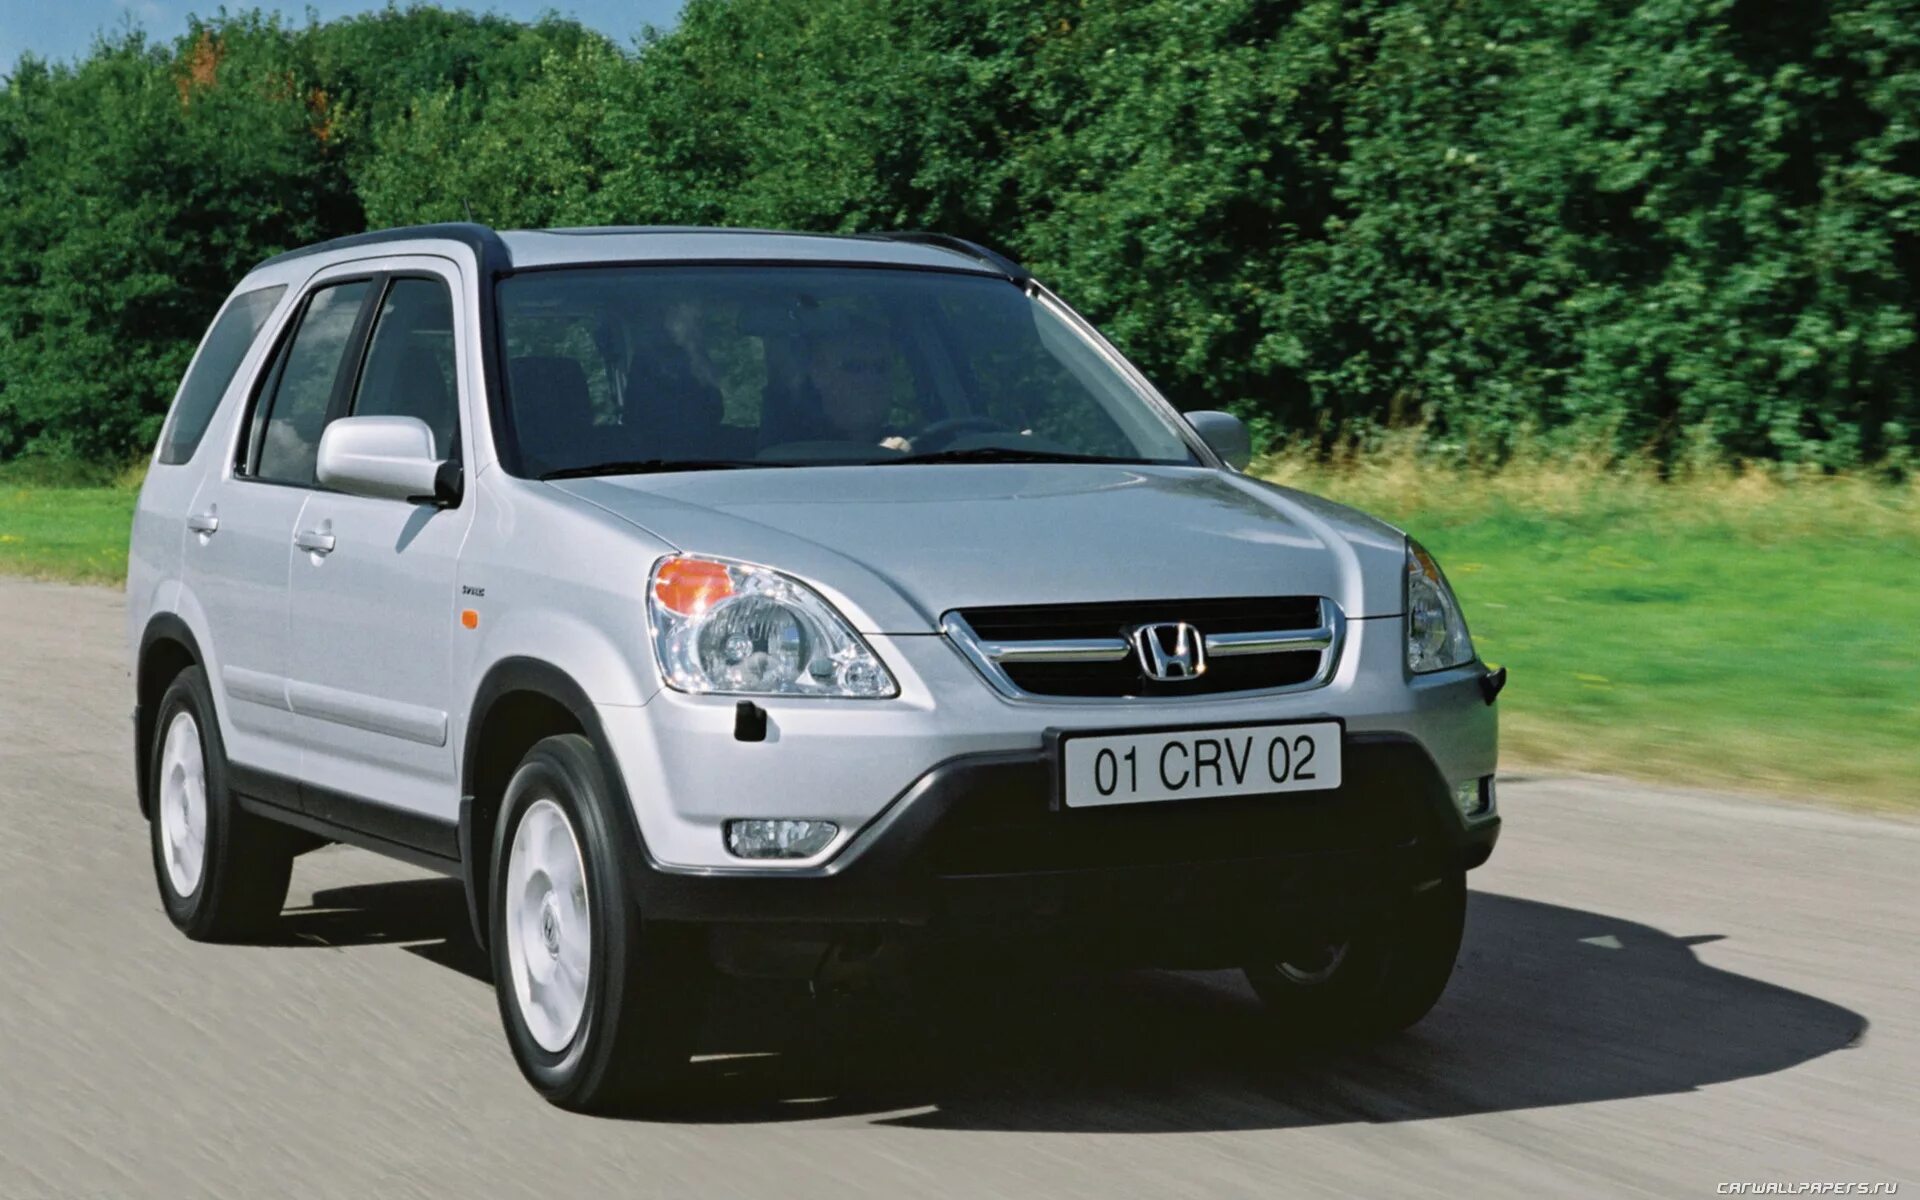 Honda CR-V 2002. Honda CRV 2002. Хонда CR-V 2002-2006. Honda CRV 2 2005. Honda cr v 2003